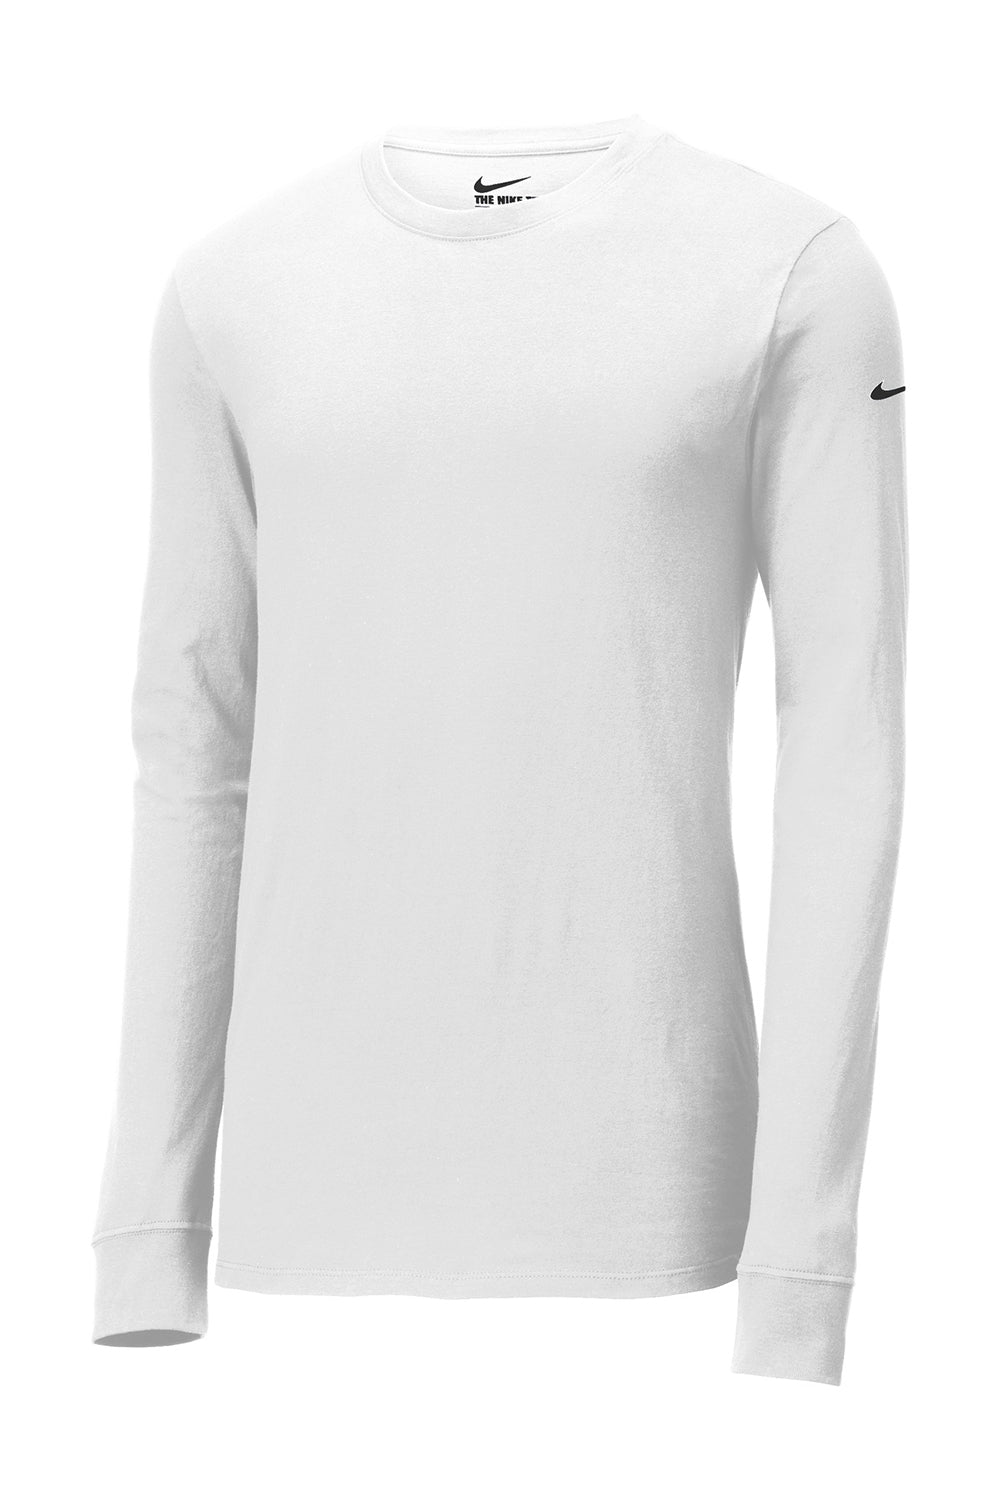 Nike NKBQ5230 Mens Dri-Fit Moisture Wicking Long Sleeve Crewneck T-Shirt White Flat Front